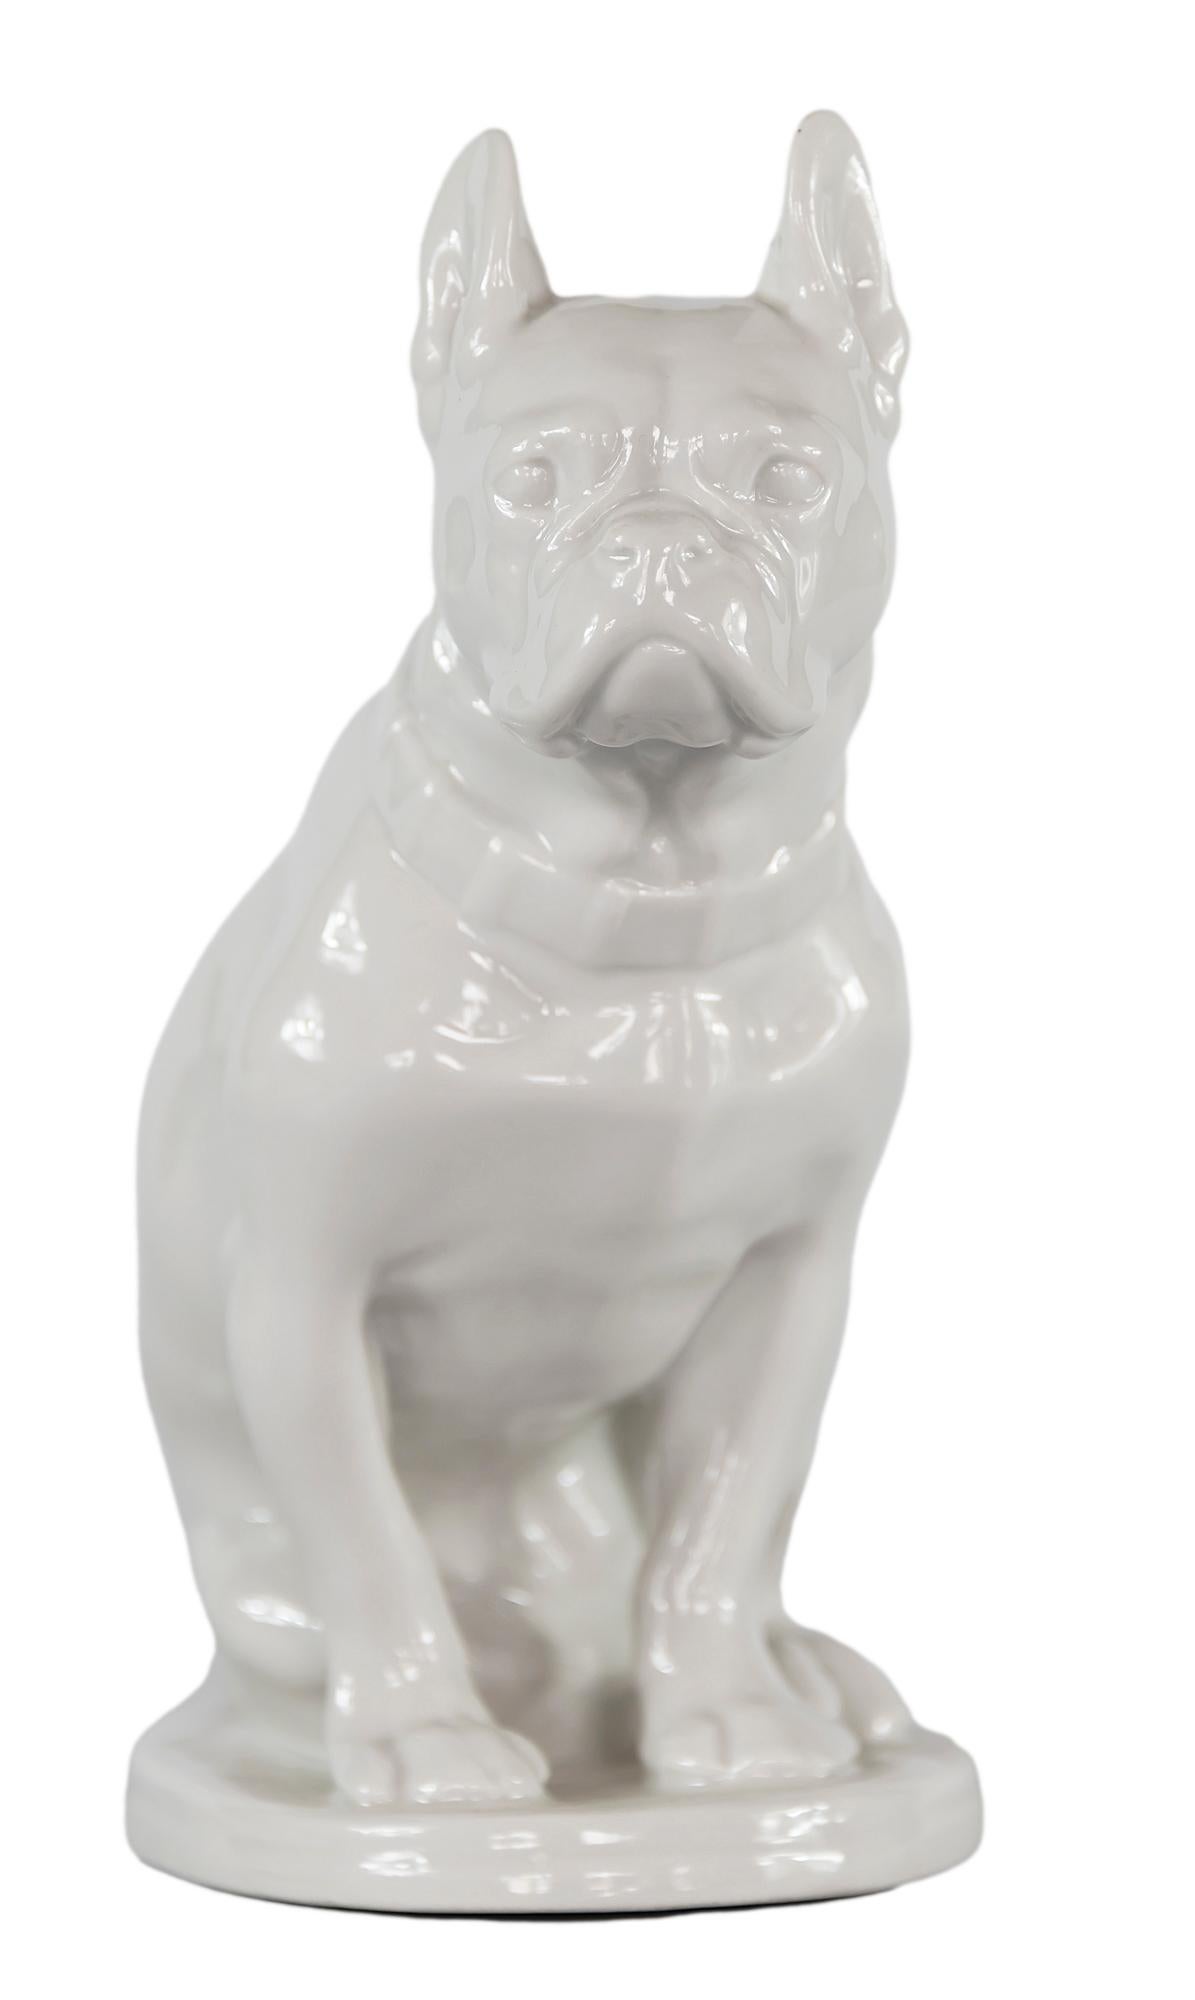 Vintage white glazed porcelain bulldog figurine by Russian Lomonosov Porcelain Factory LFZ.
Marked on the bottom.